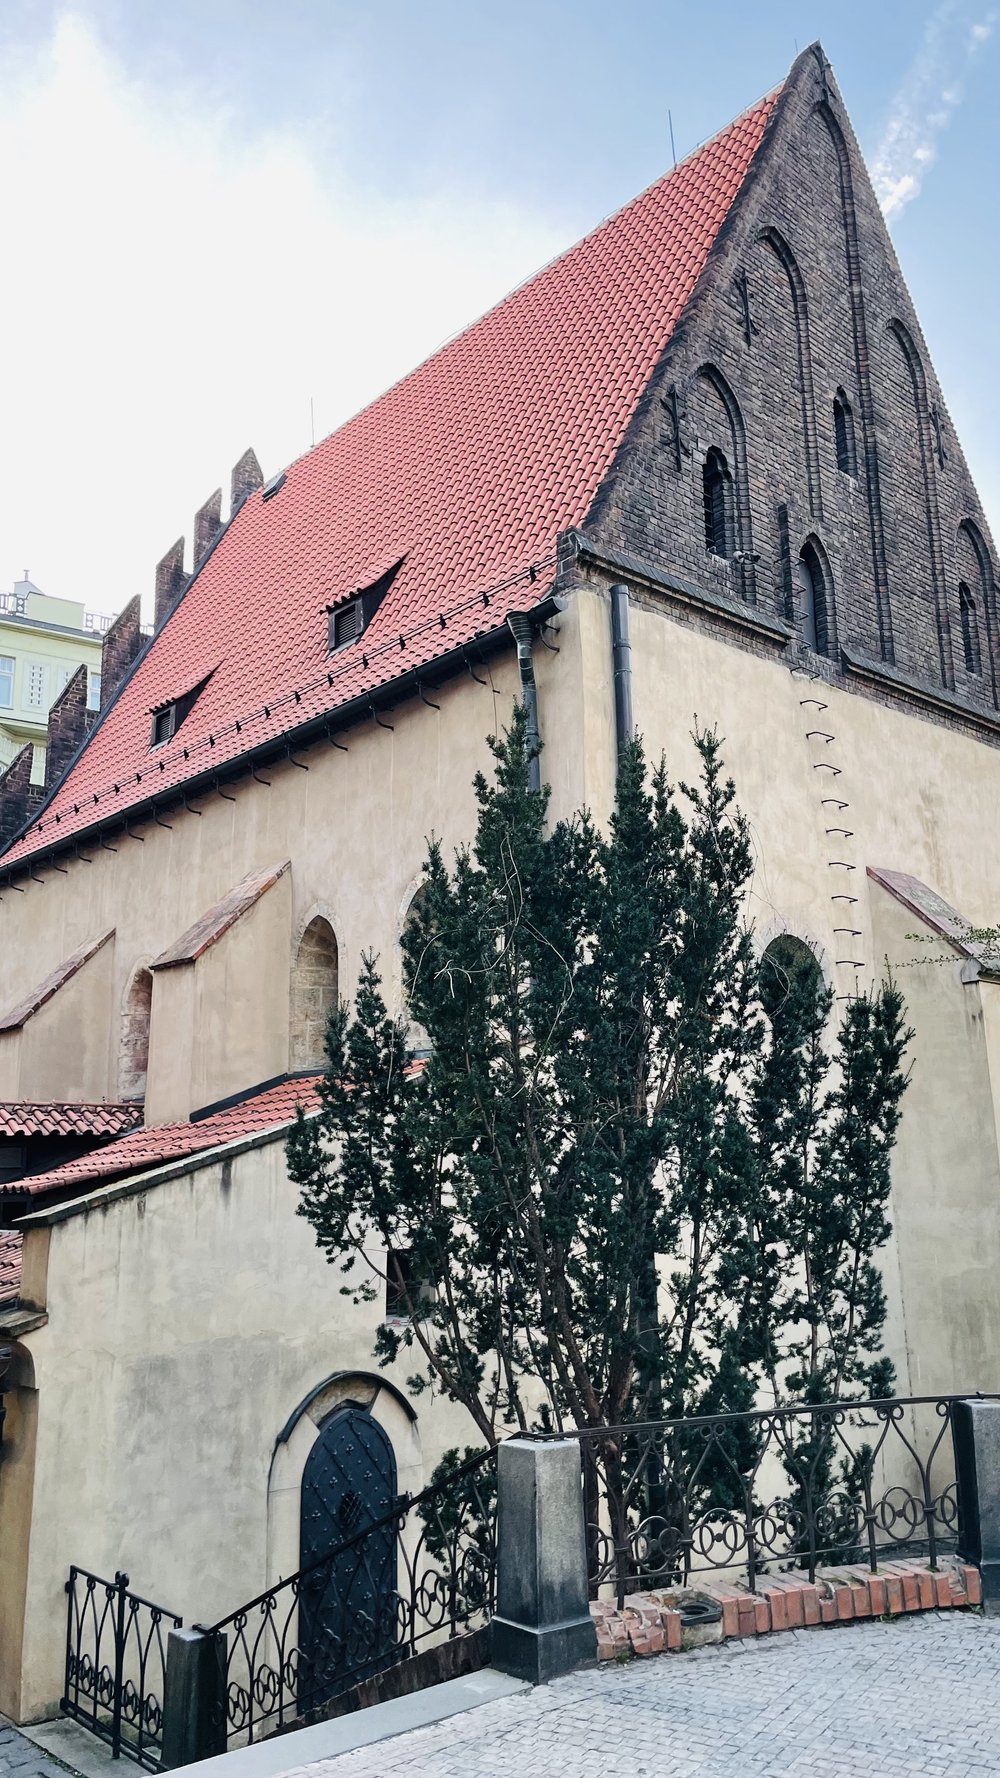 Old-New Synagogue, Prague (Copia)